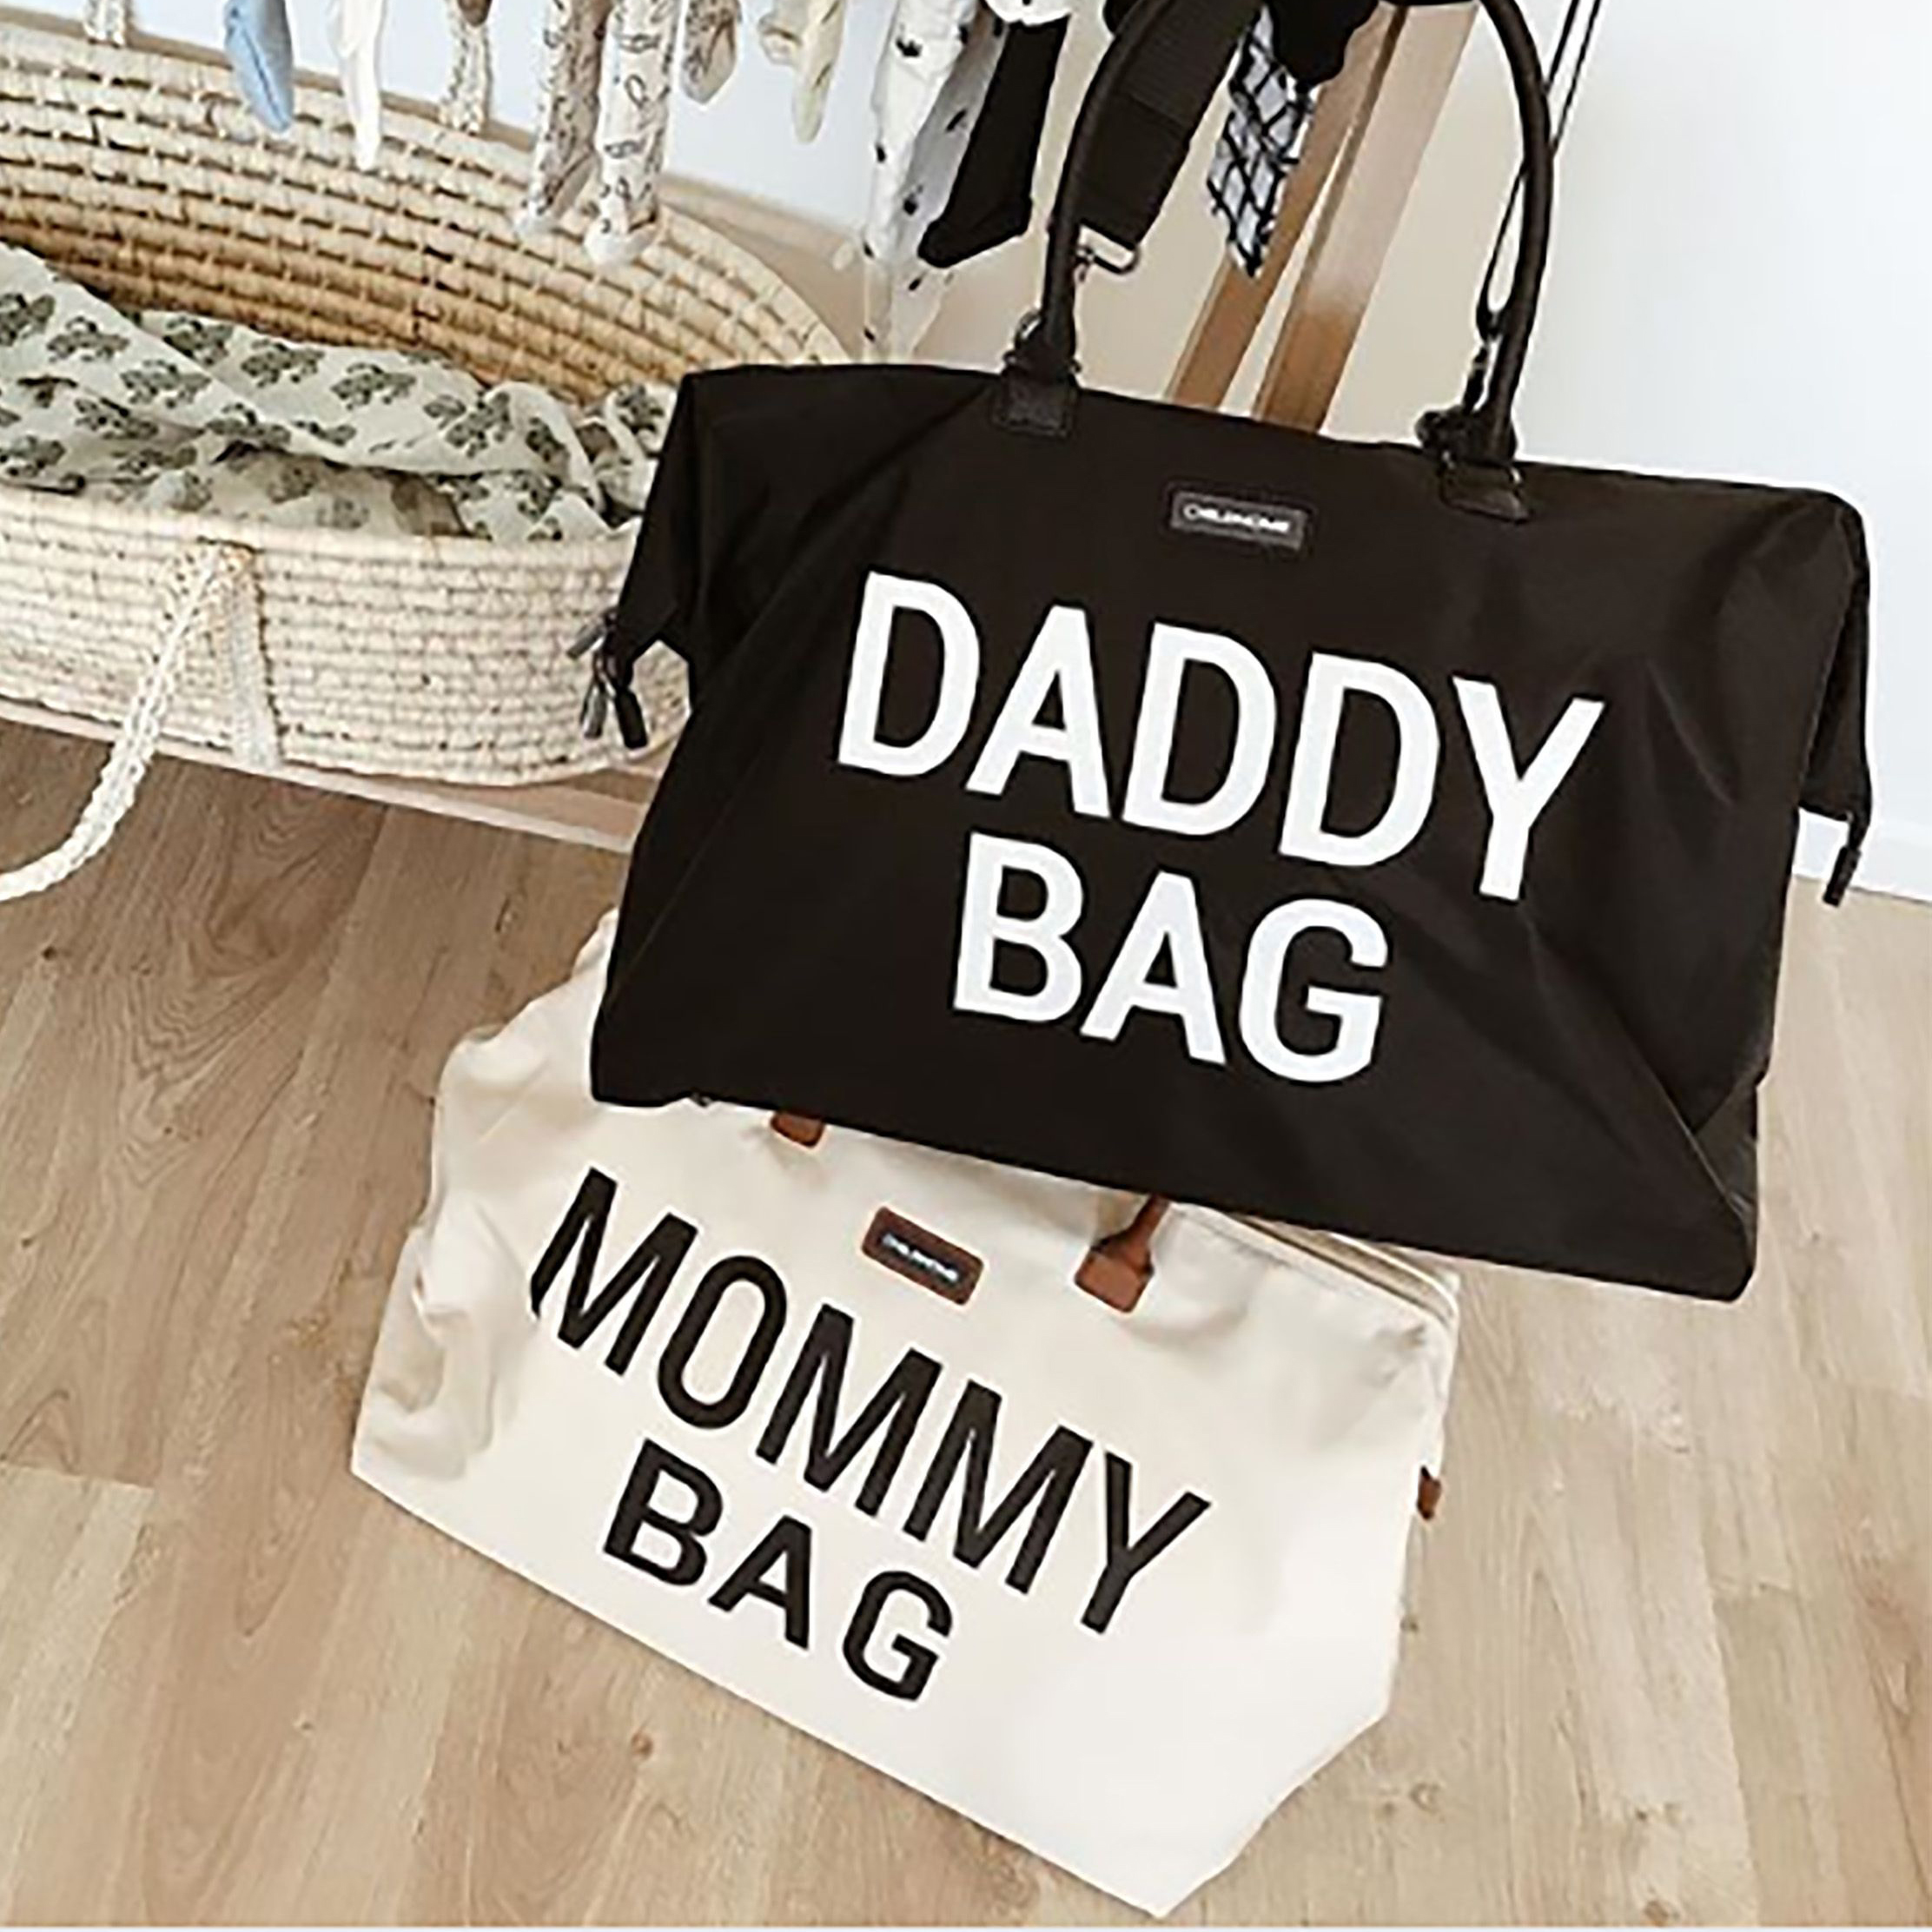 Childhome, Torba podróżna Mommy Bag kremowa